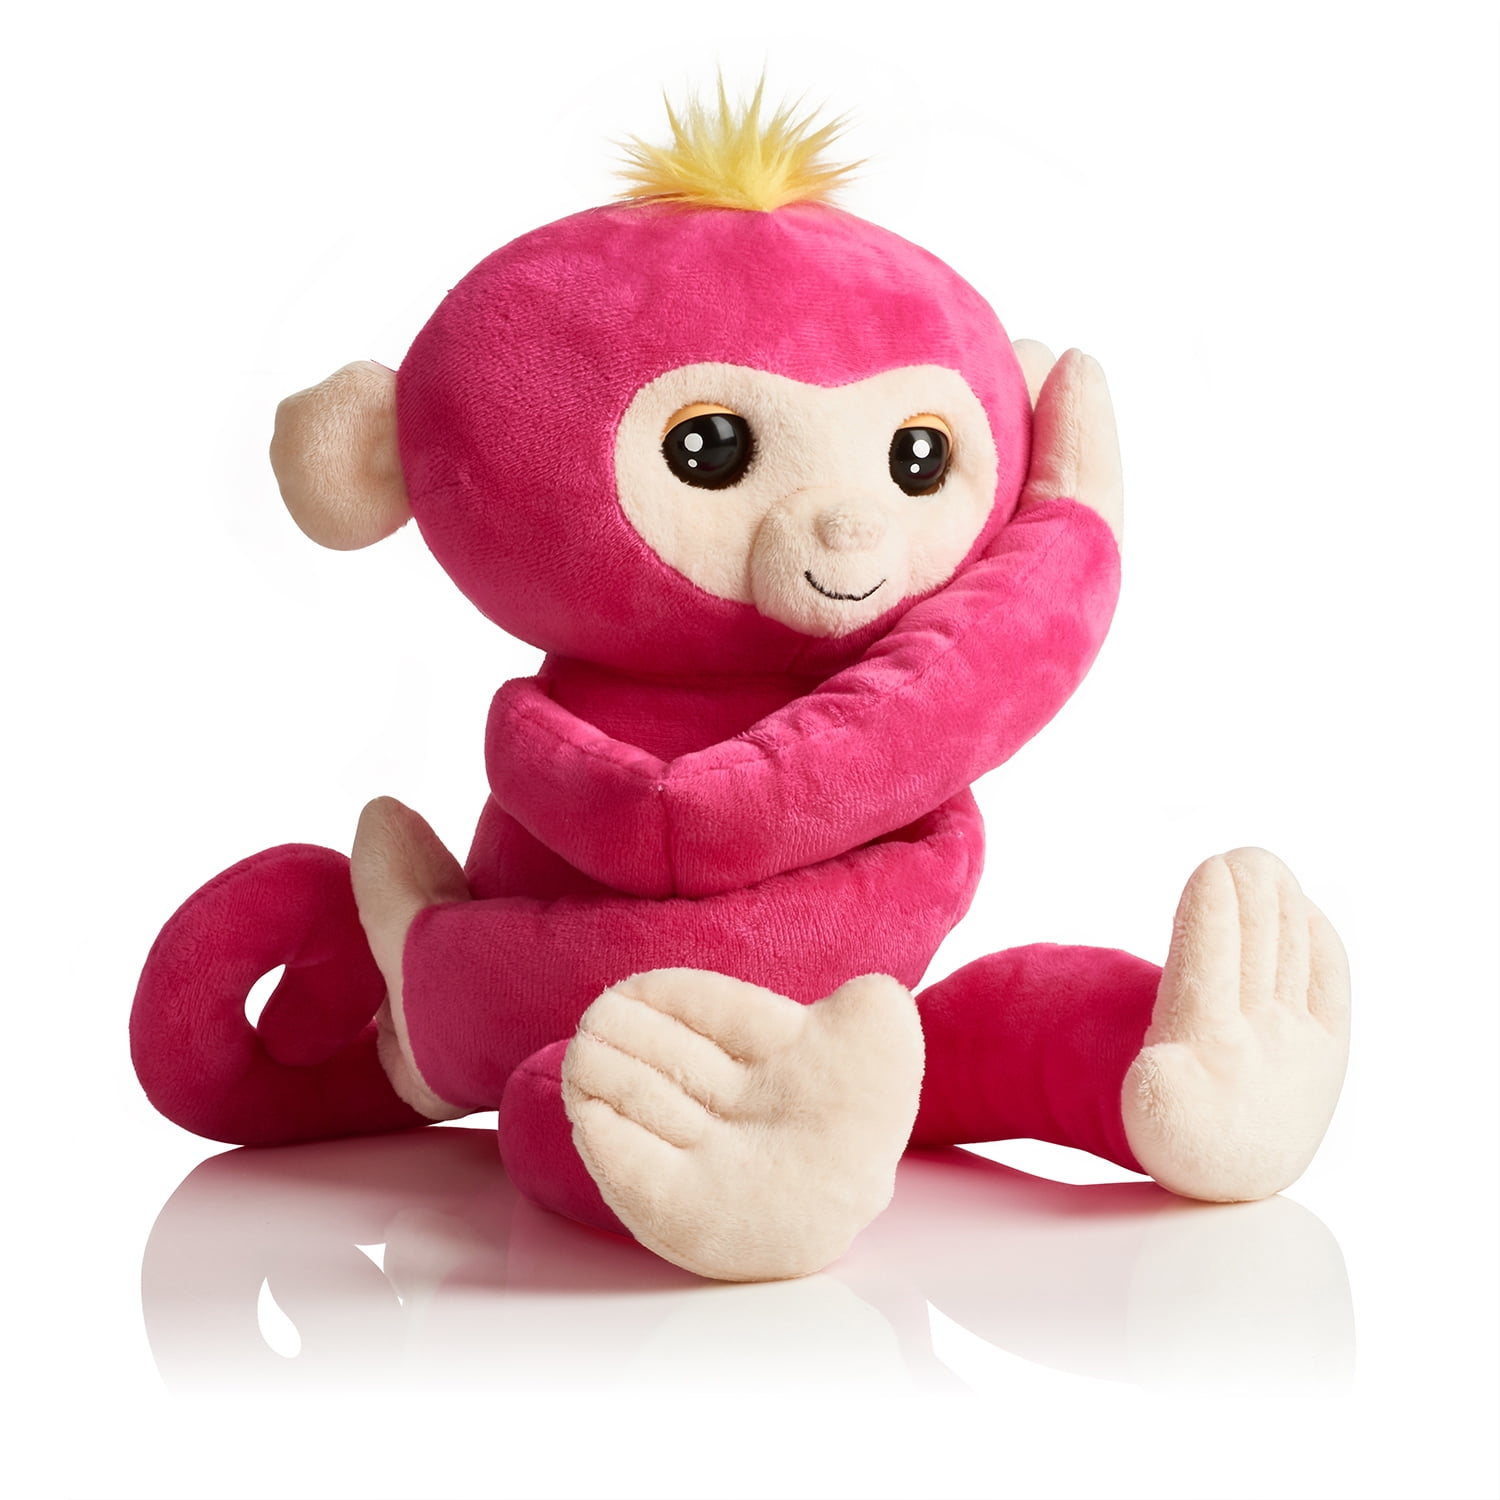 Details about   NEW Fingerlings Bath buddy banana body wash & glove/mitt Bella pink monkey 